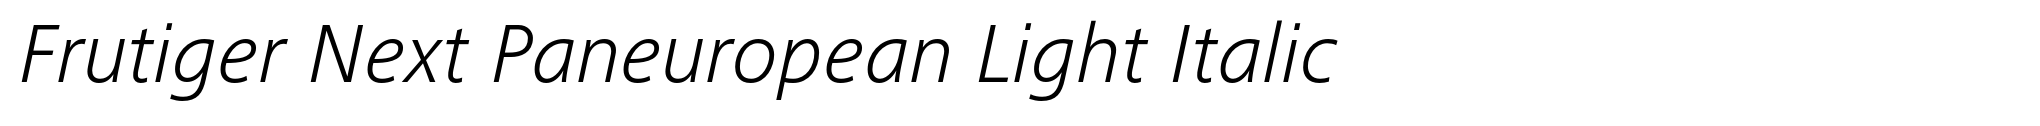 Frutiger Next Paneuropean Light Italic image